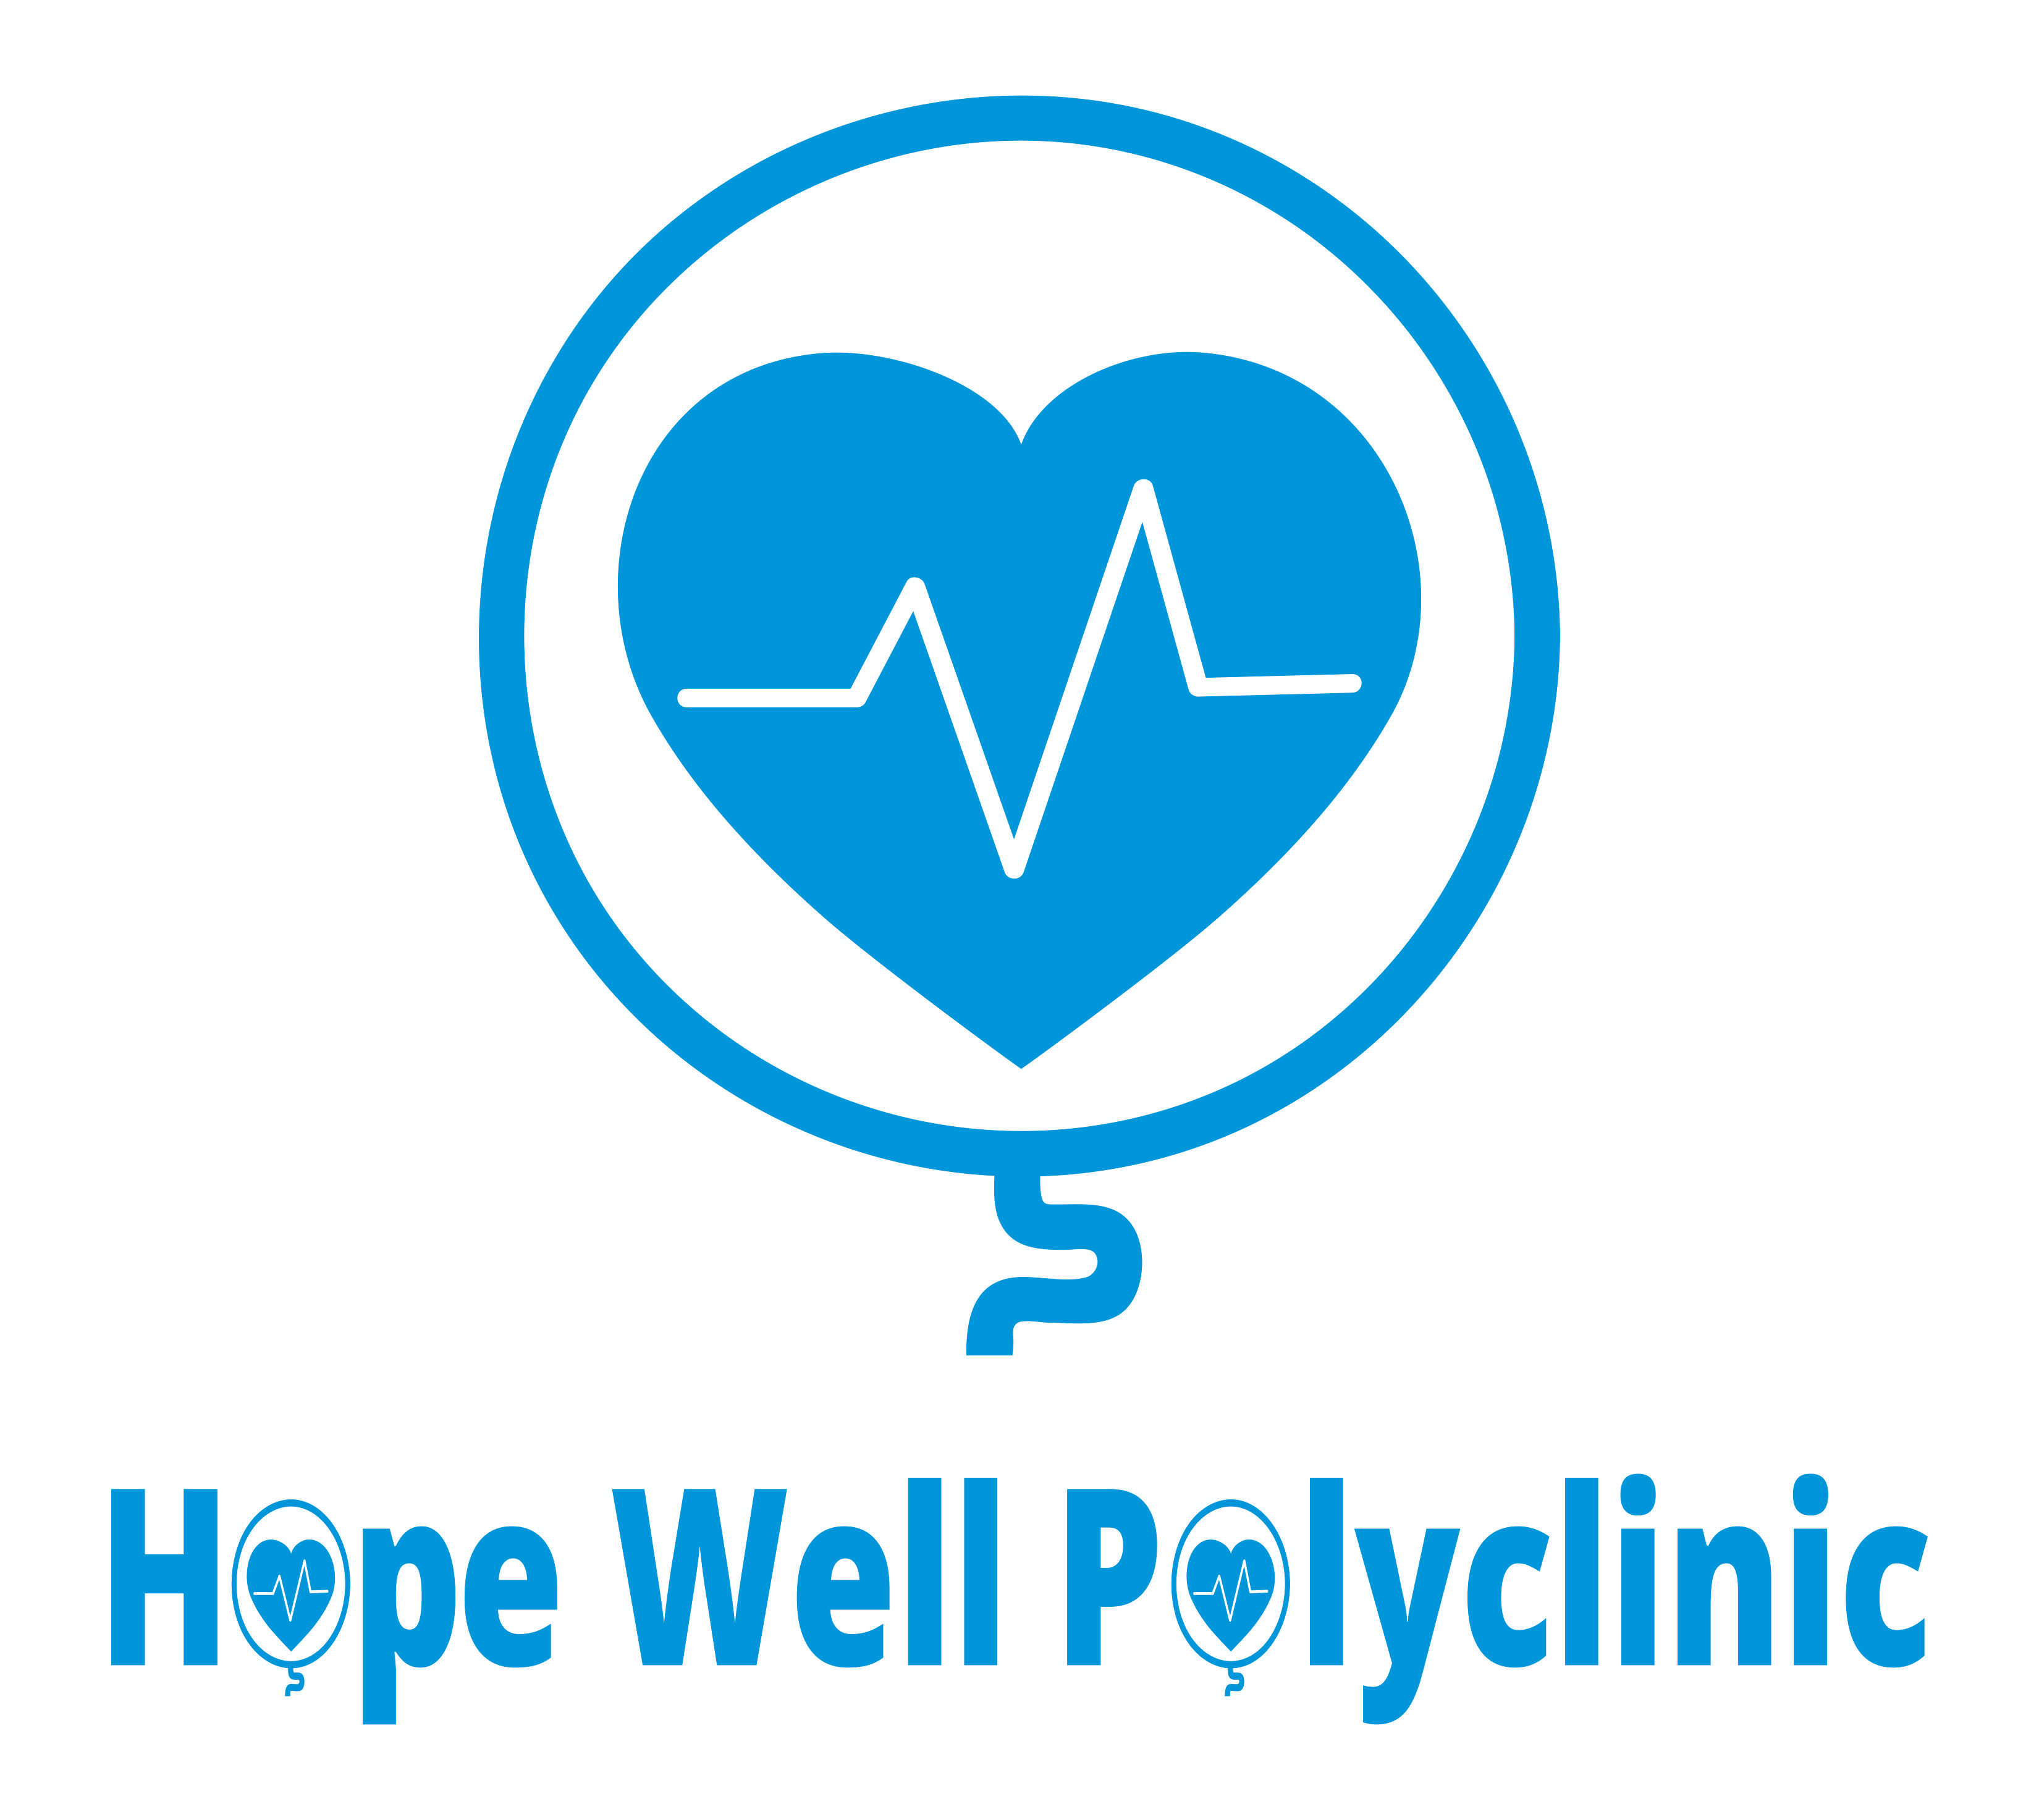 Hope Well Polyclinic